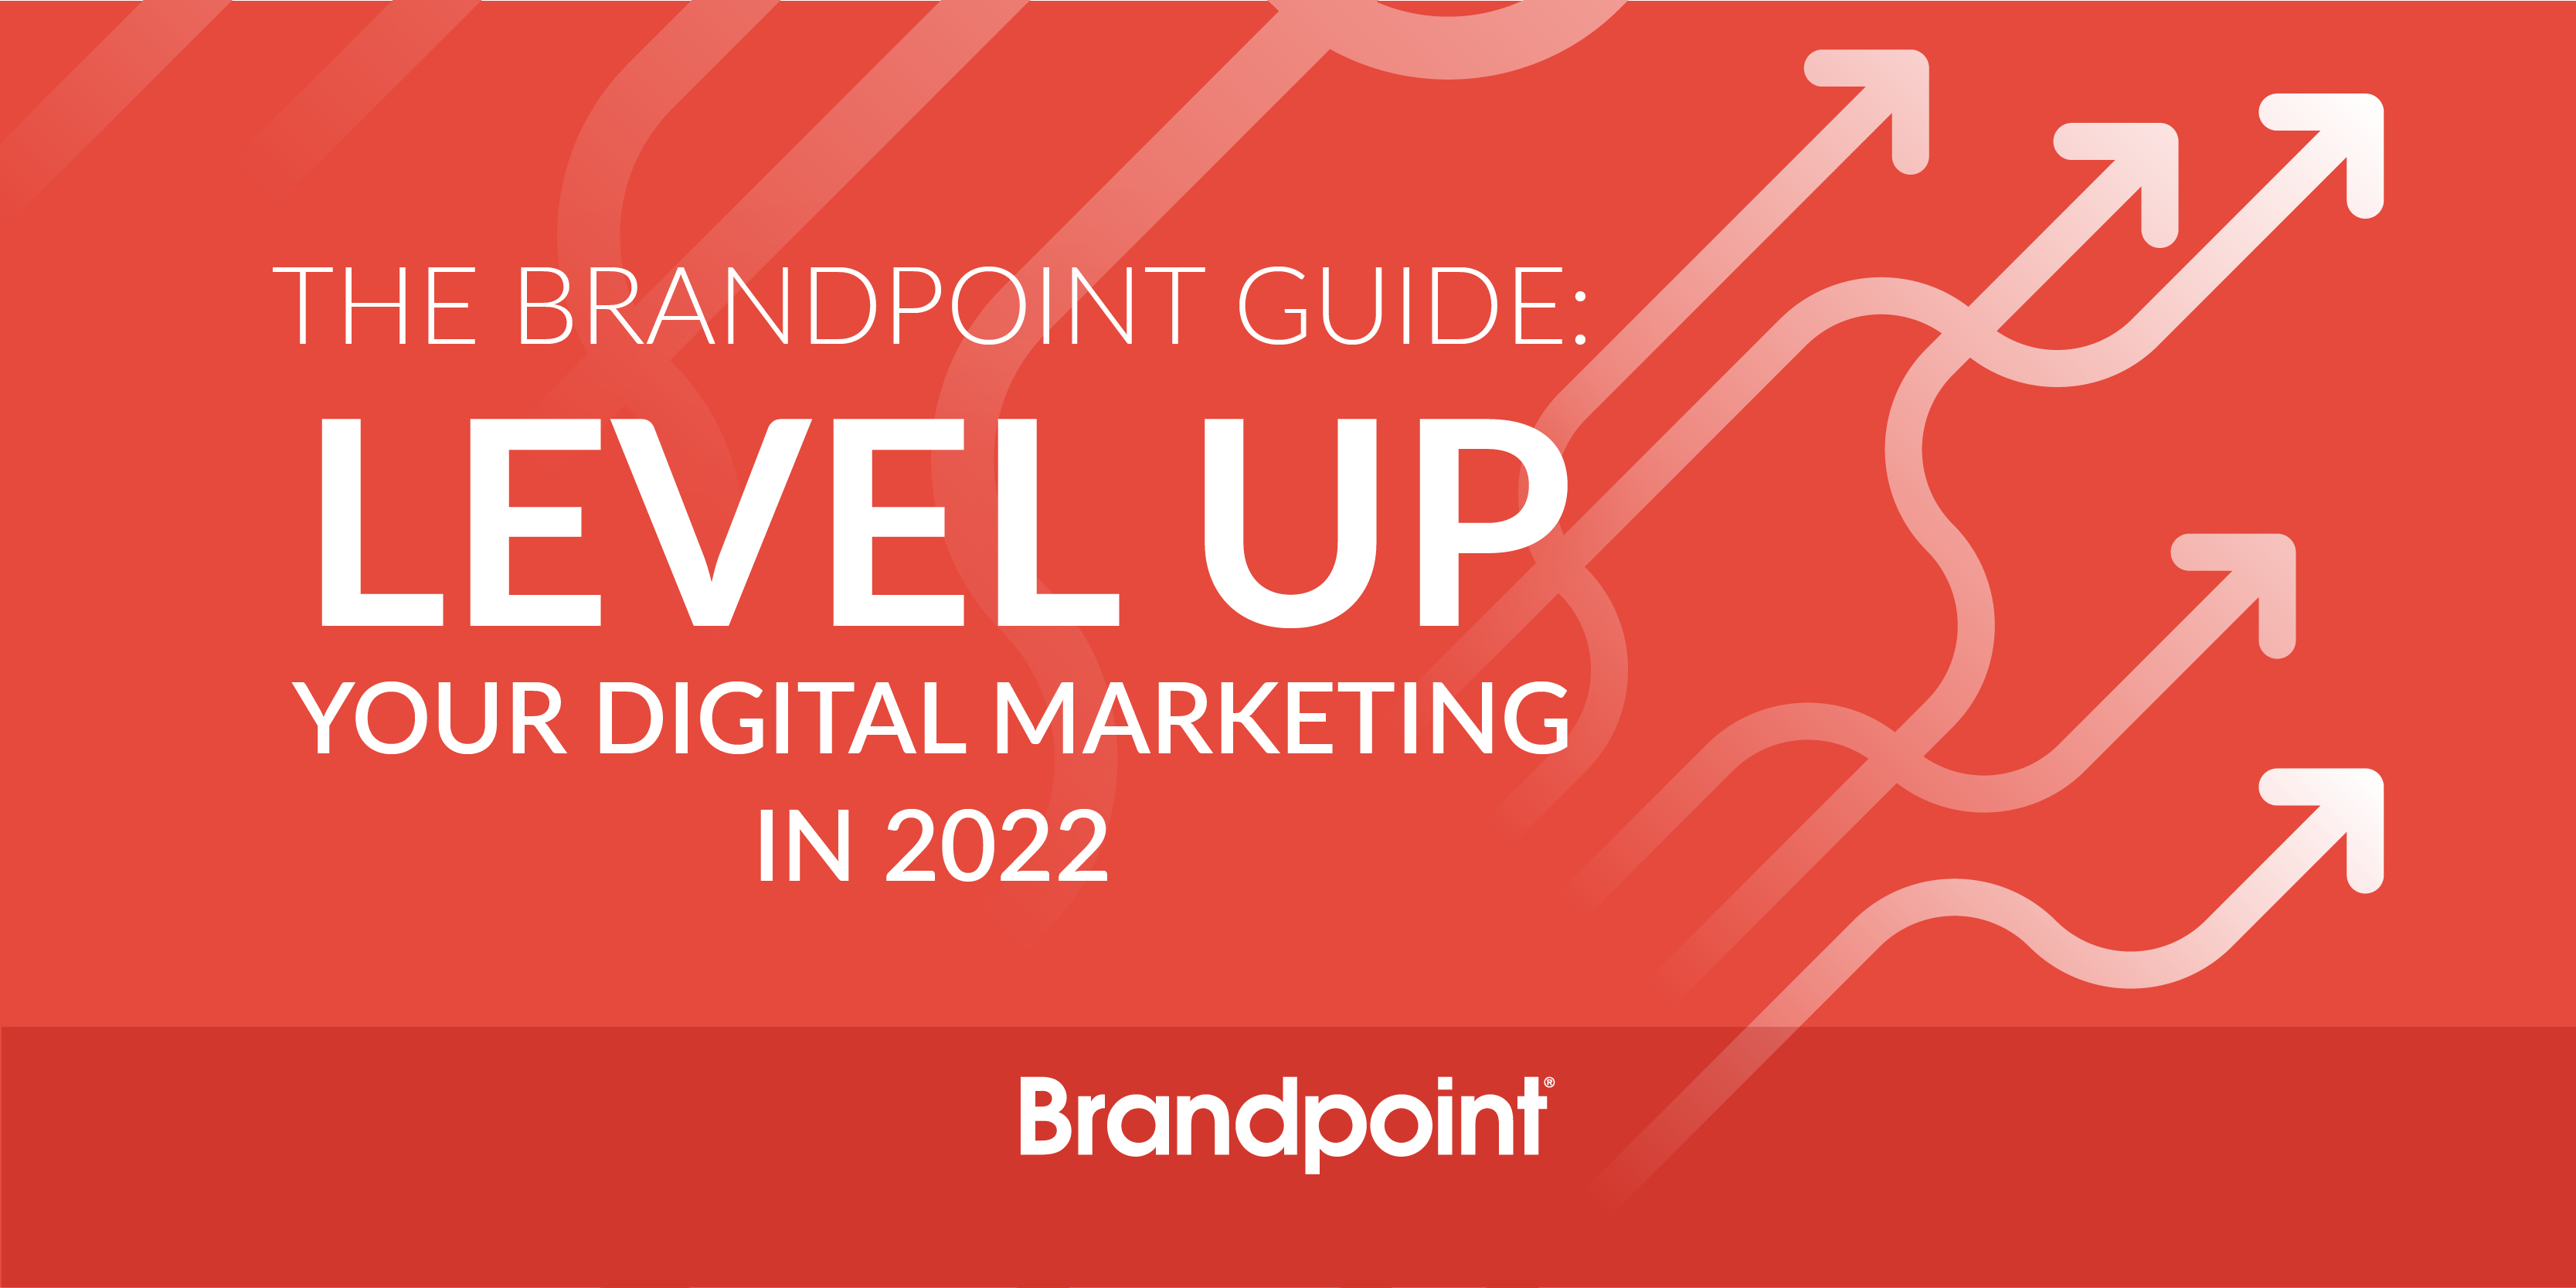 Digital Marketing in 2022